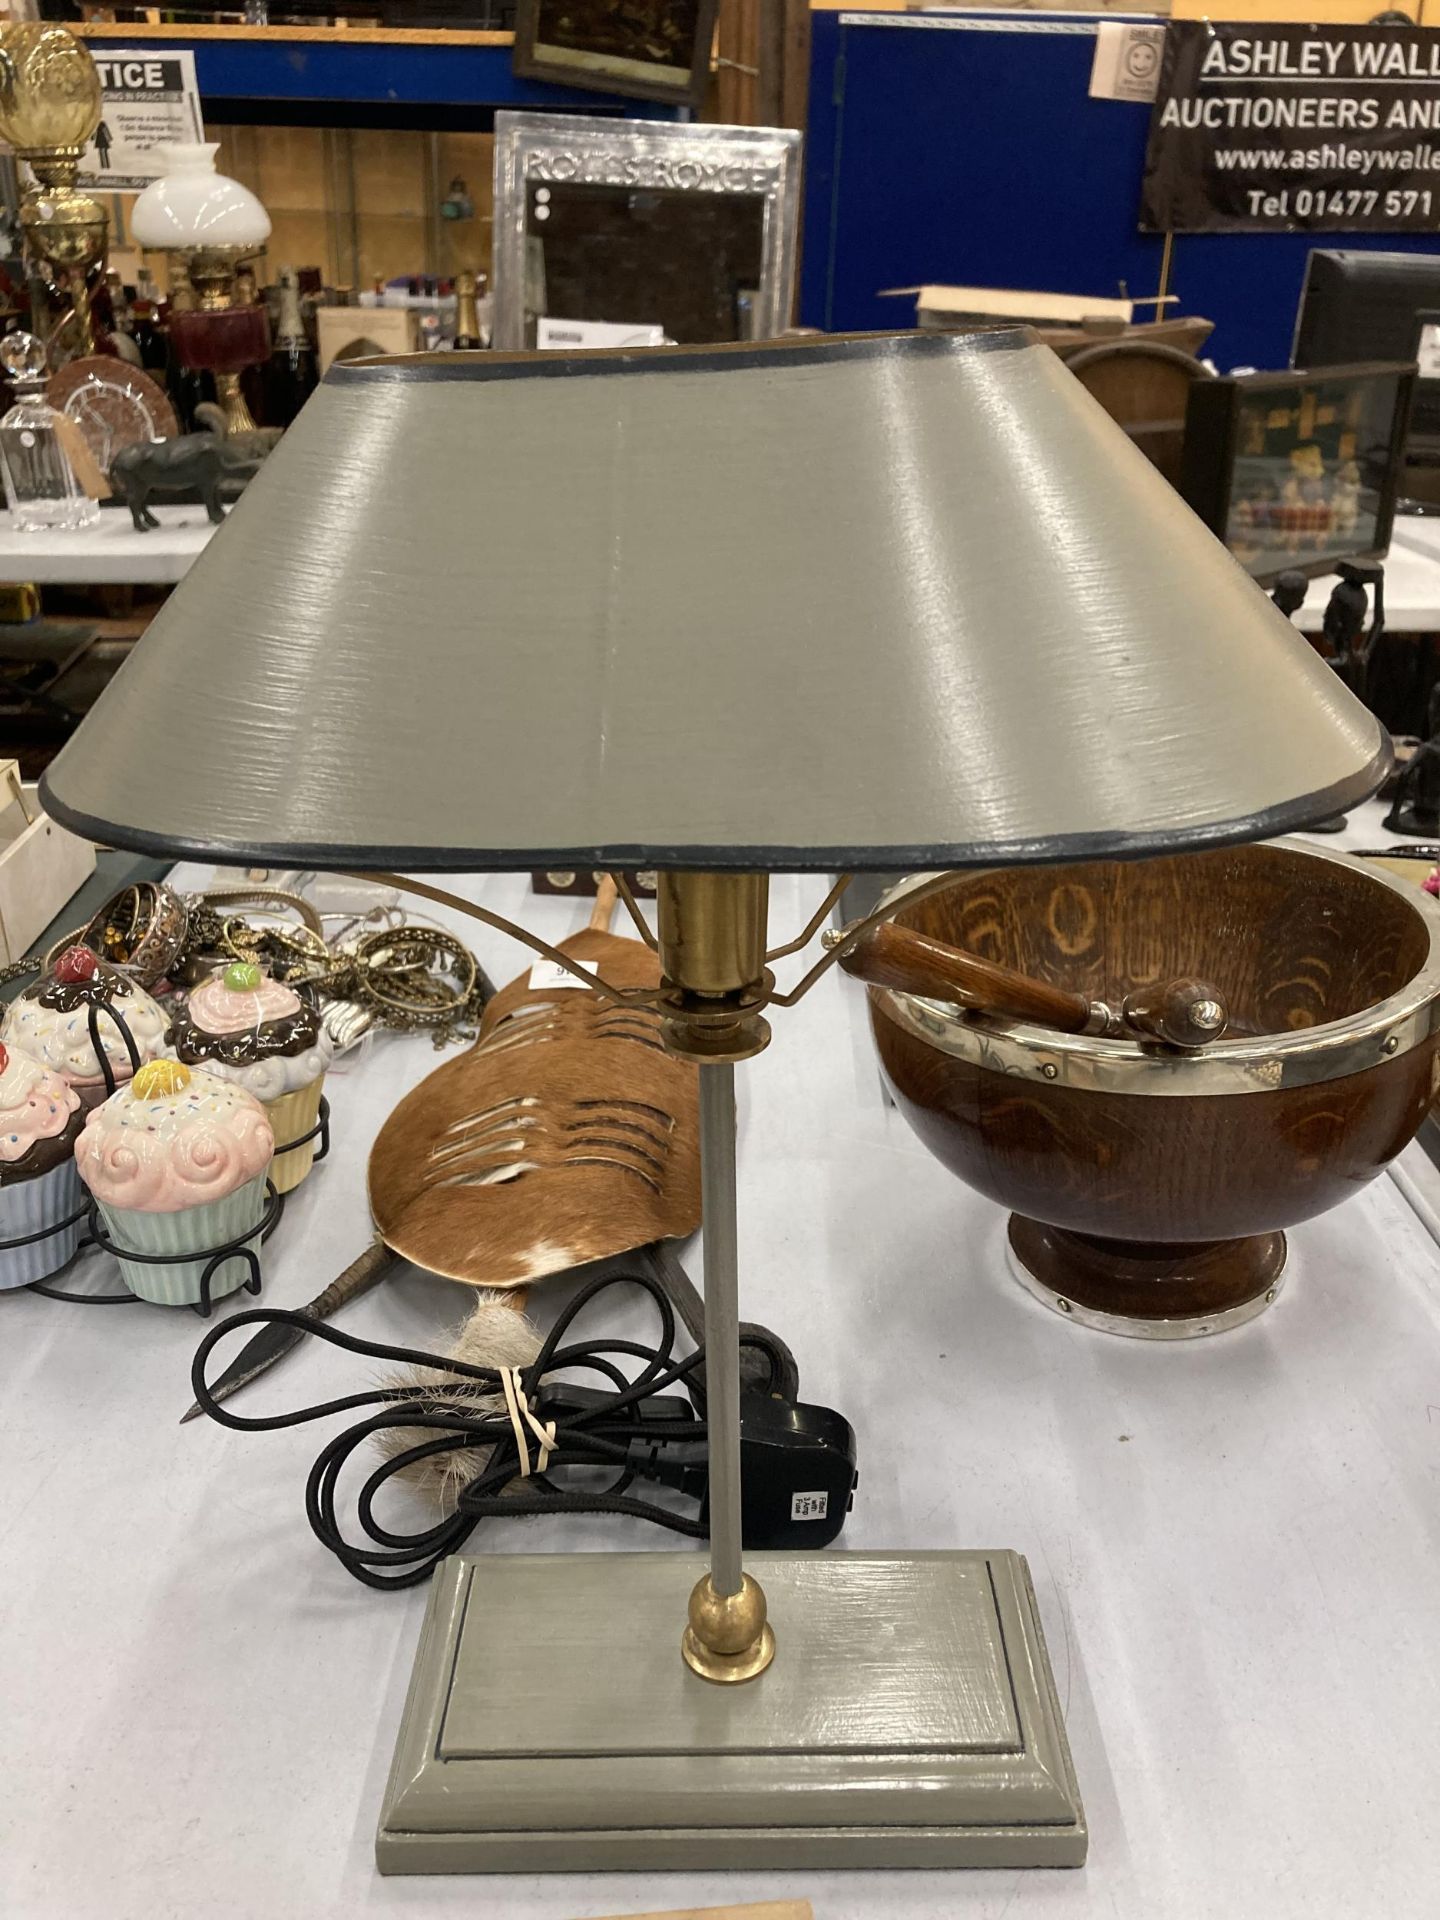 AN OKA METAL SUEDE TABLE LAMP